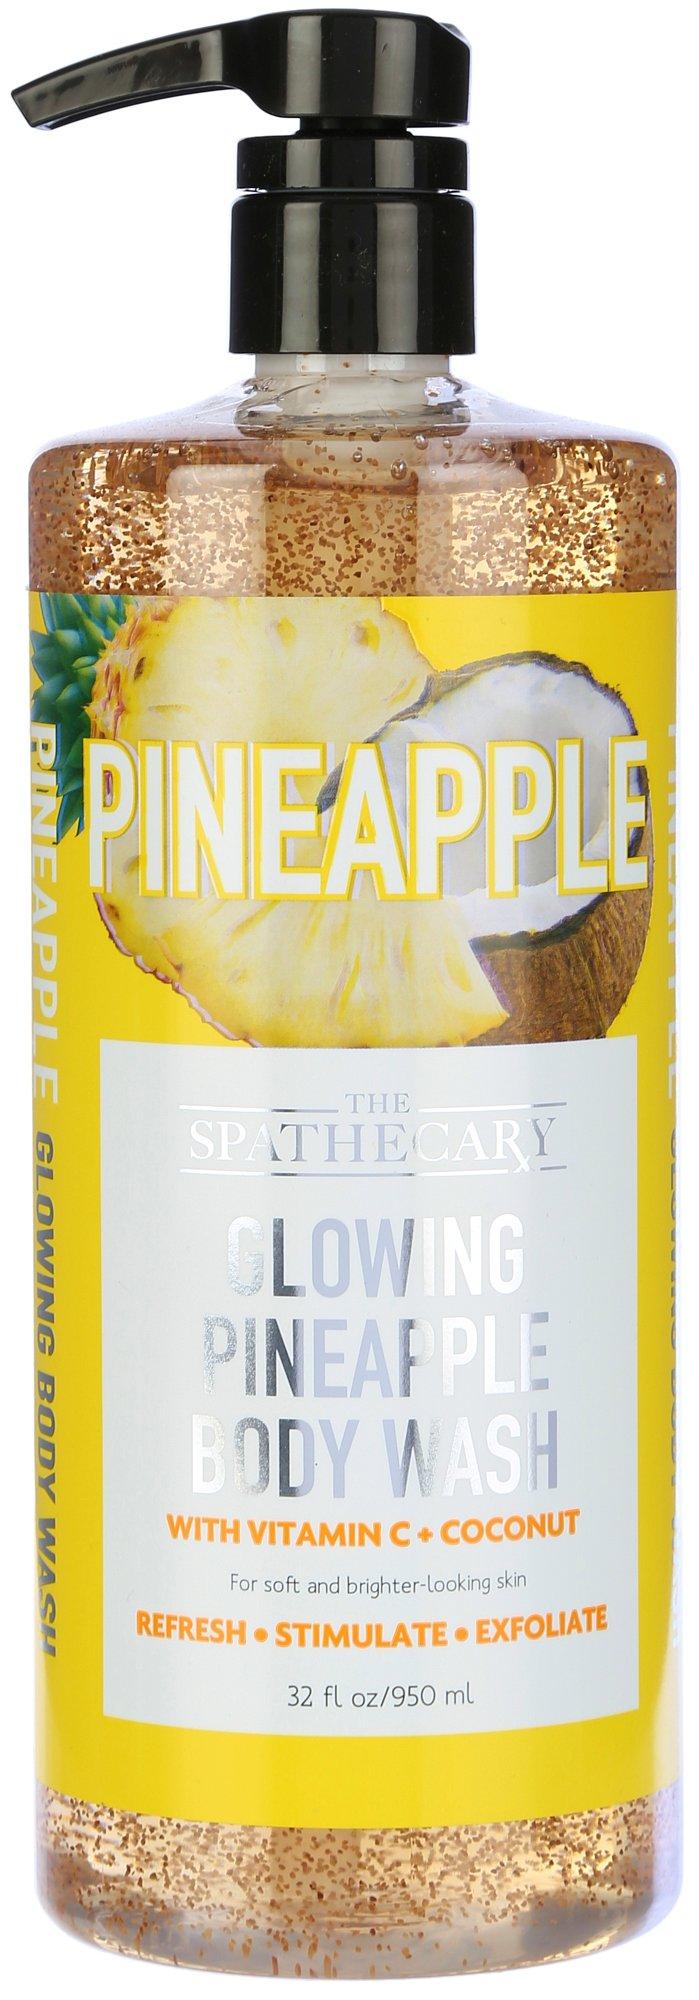 Pineapple Exfoliating Body Wash